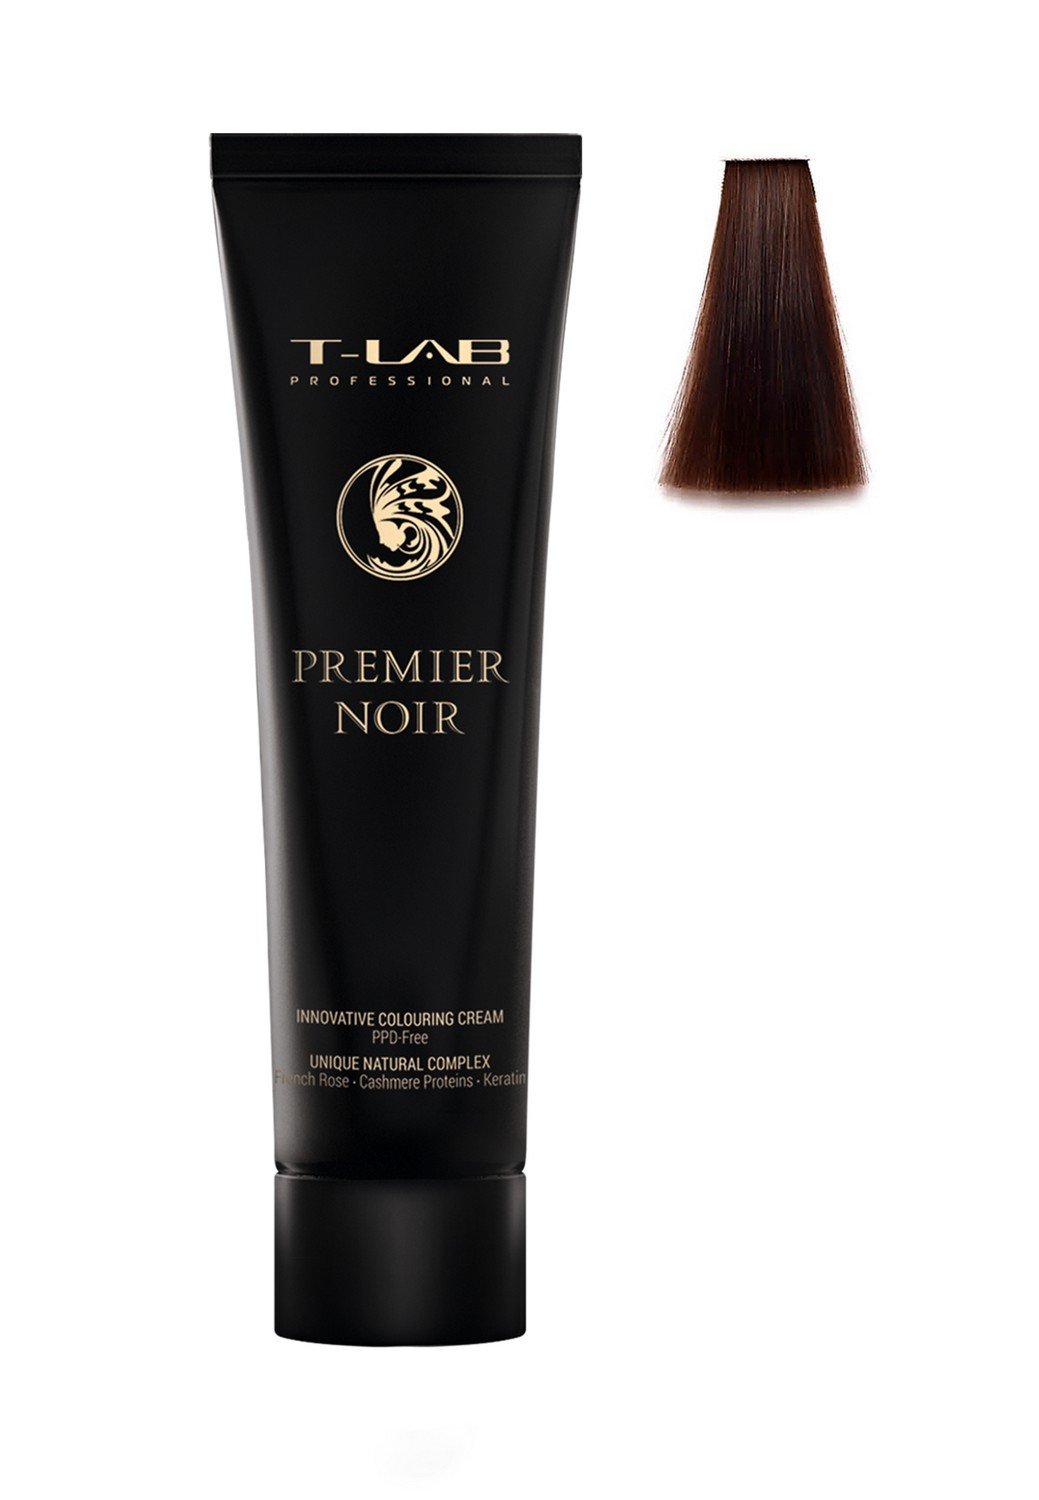 Крем-краска T-LAB Professional Premier Noir colouring cream, оттенок 4.45 (copper mahogany brown) - фото 2